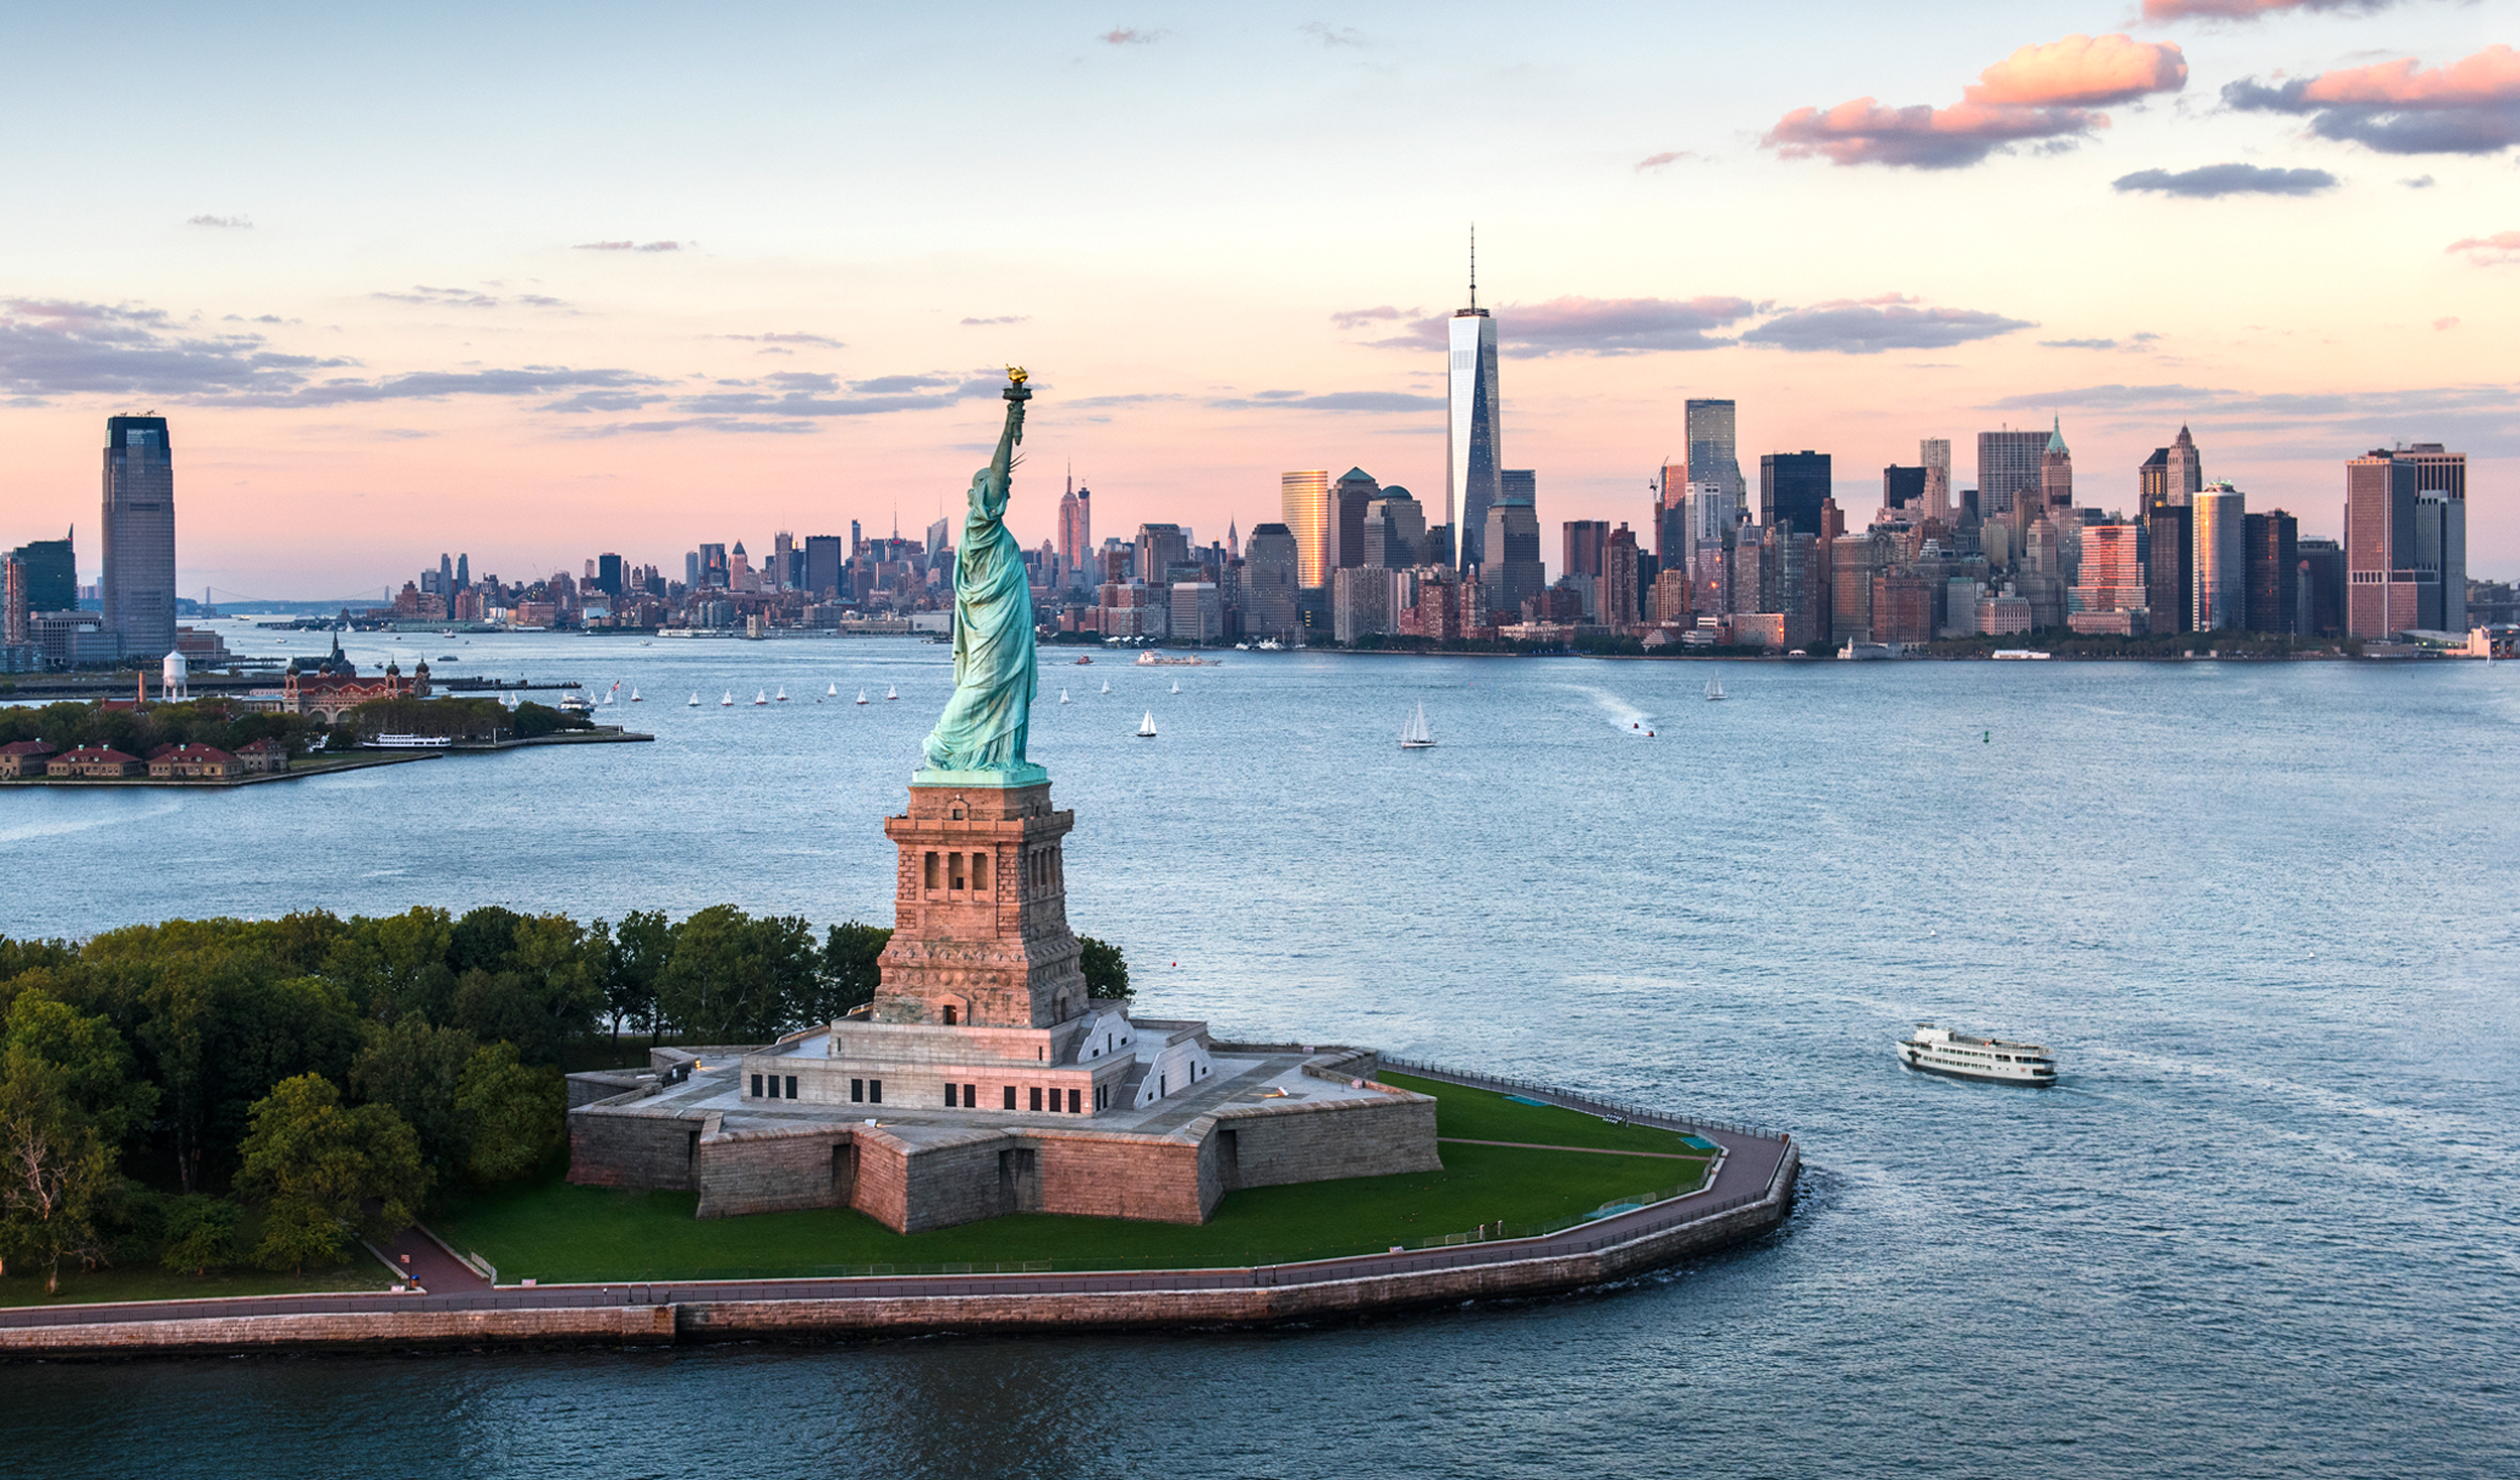 New York City - Statue of Liberty